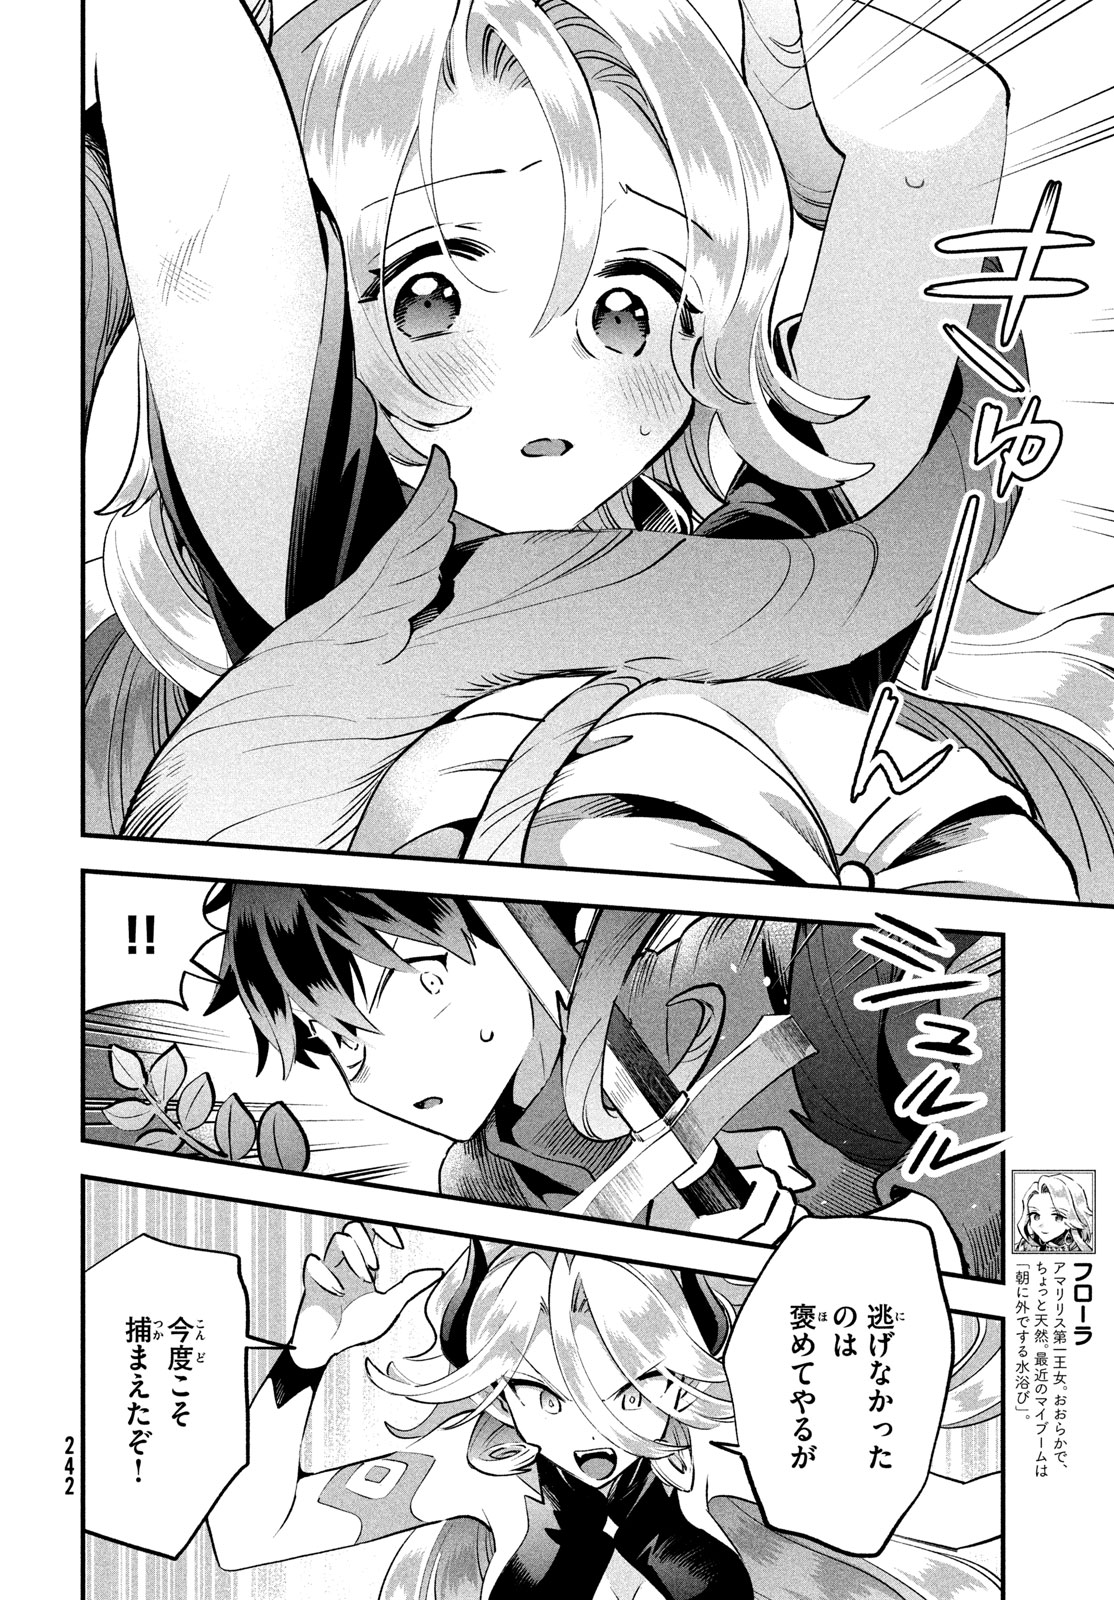 7-nin no Nemuri Hime - Chapter 47 - Page 2